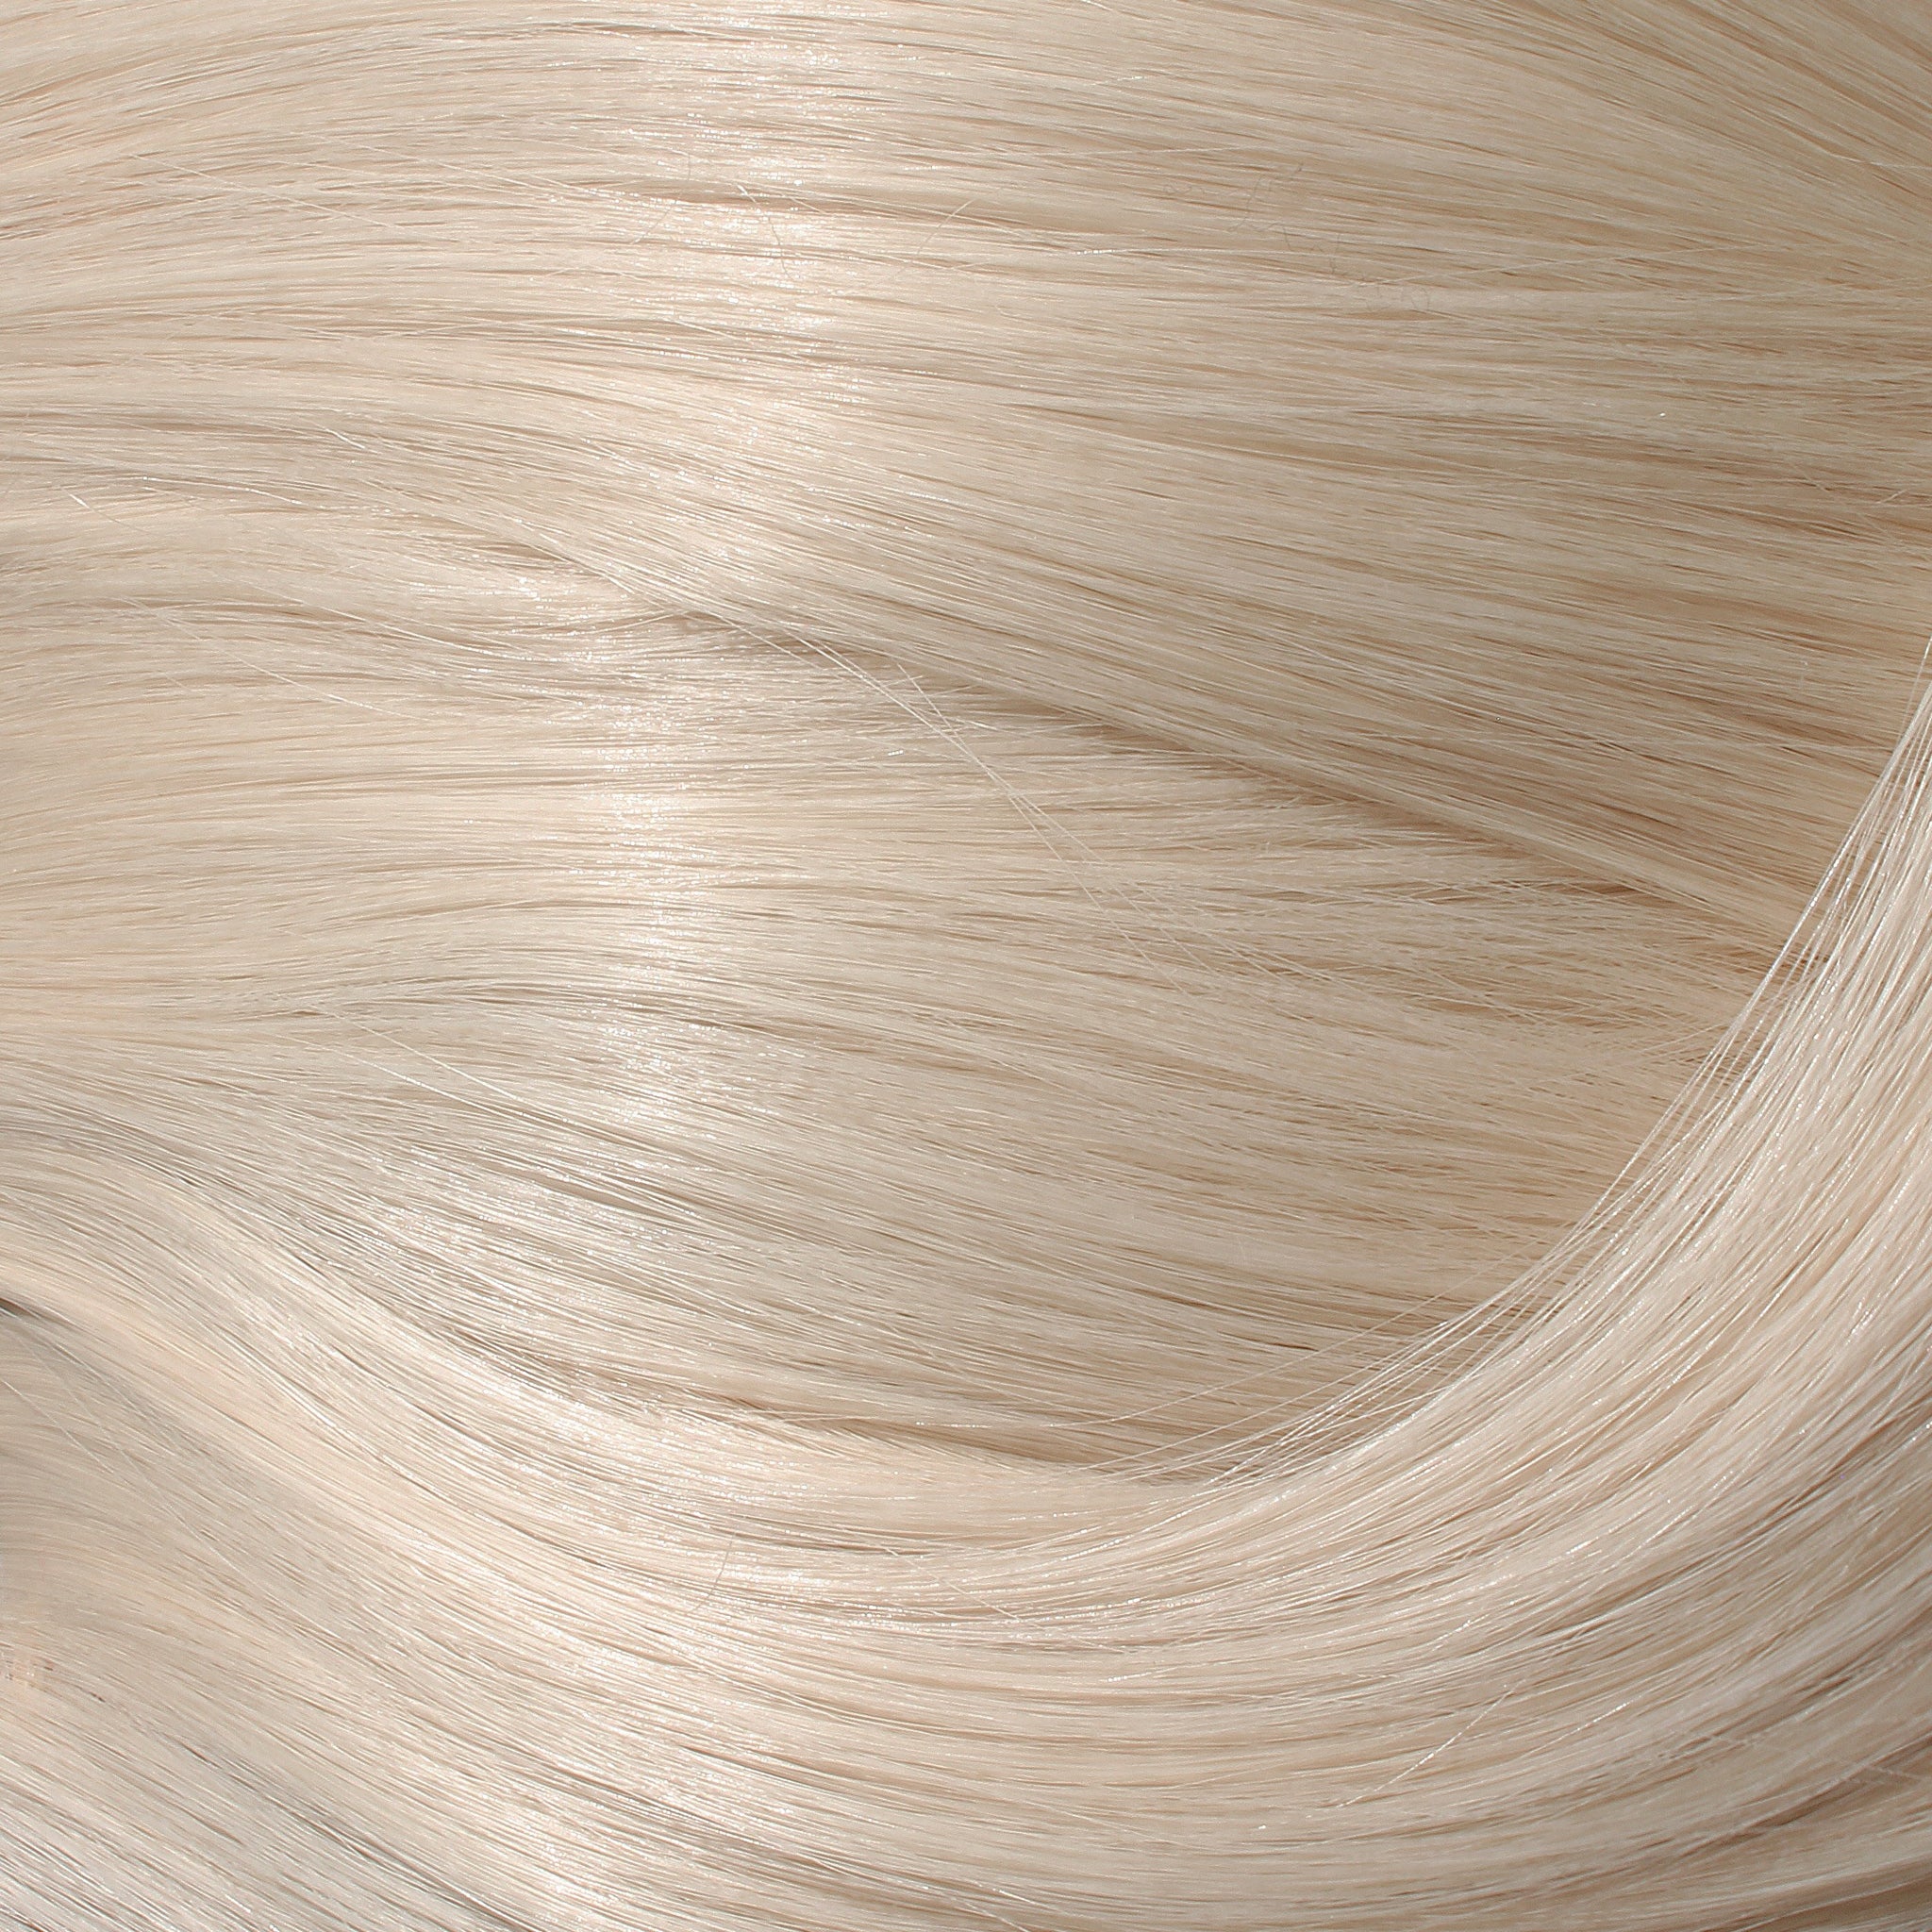 10.2 Very Light Beige Blonde Permanent Hair Colour — My